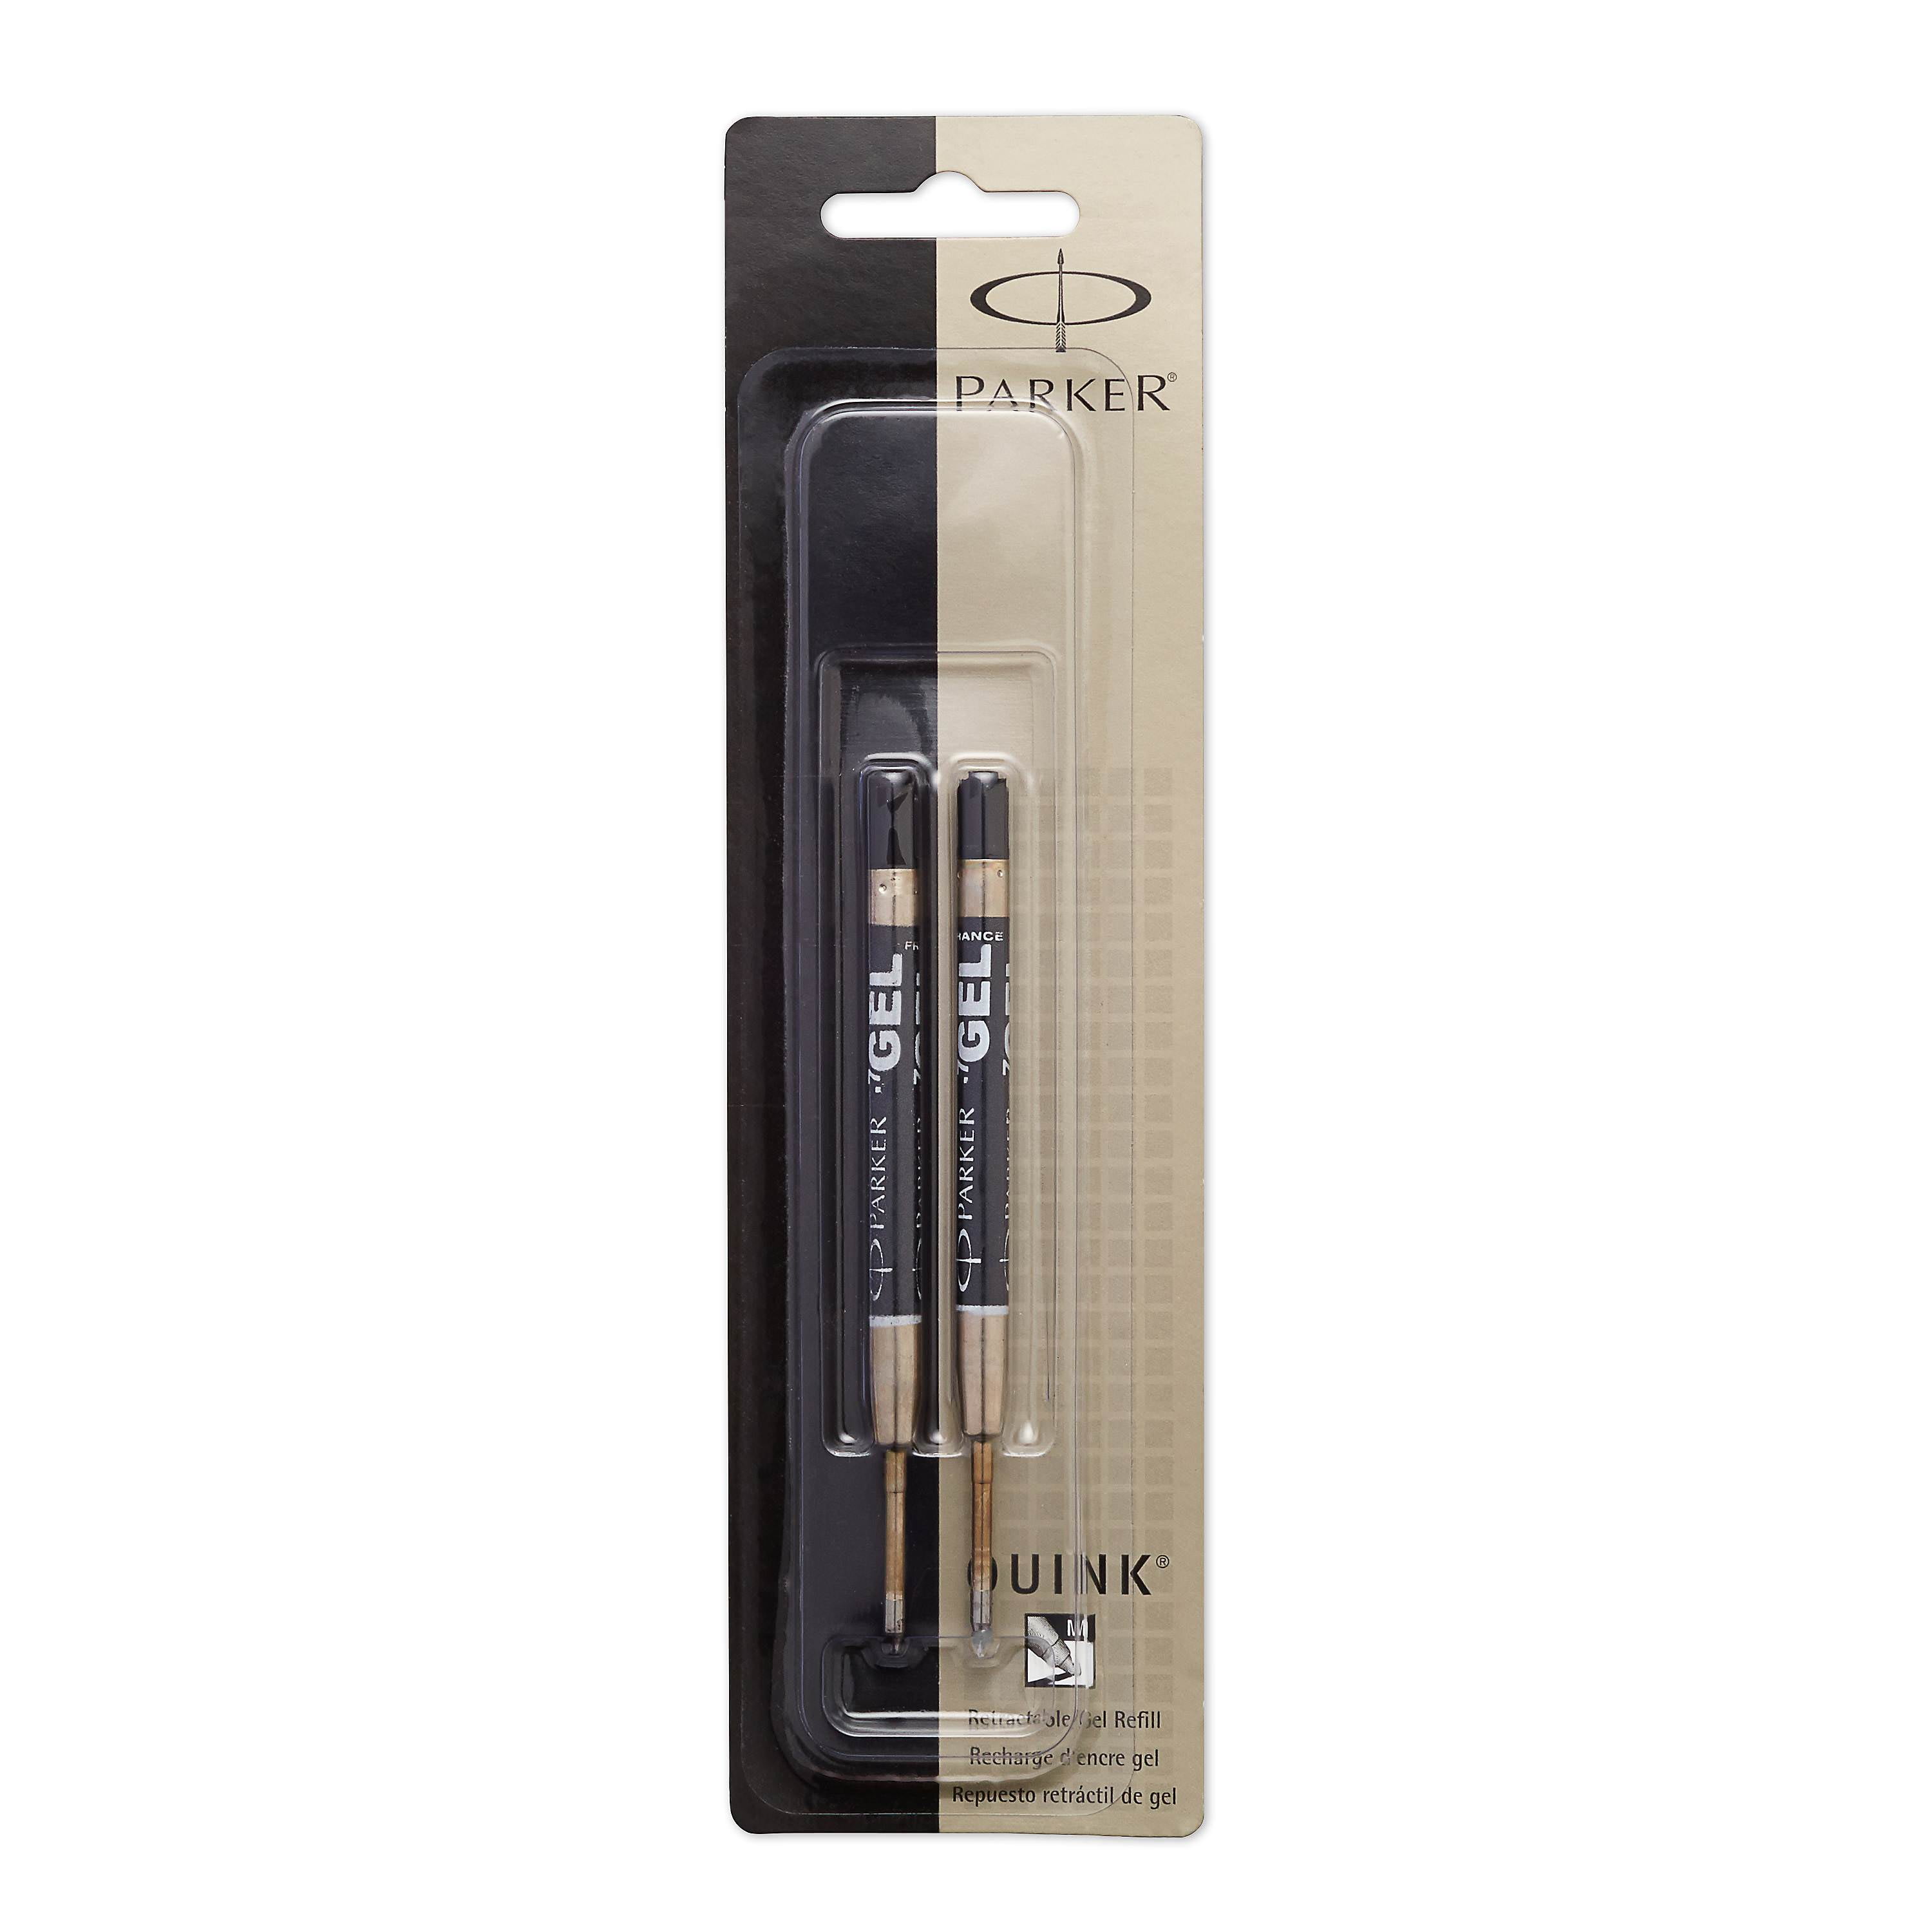 4 x Parker Ball Point Pen Refill Refills Medium Tip Black Ink Jotter Classic 